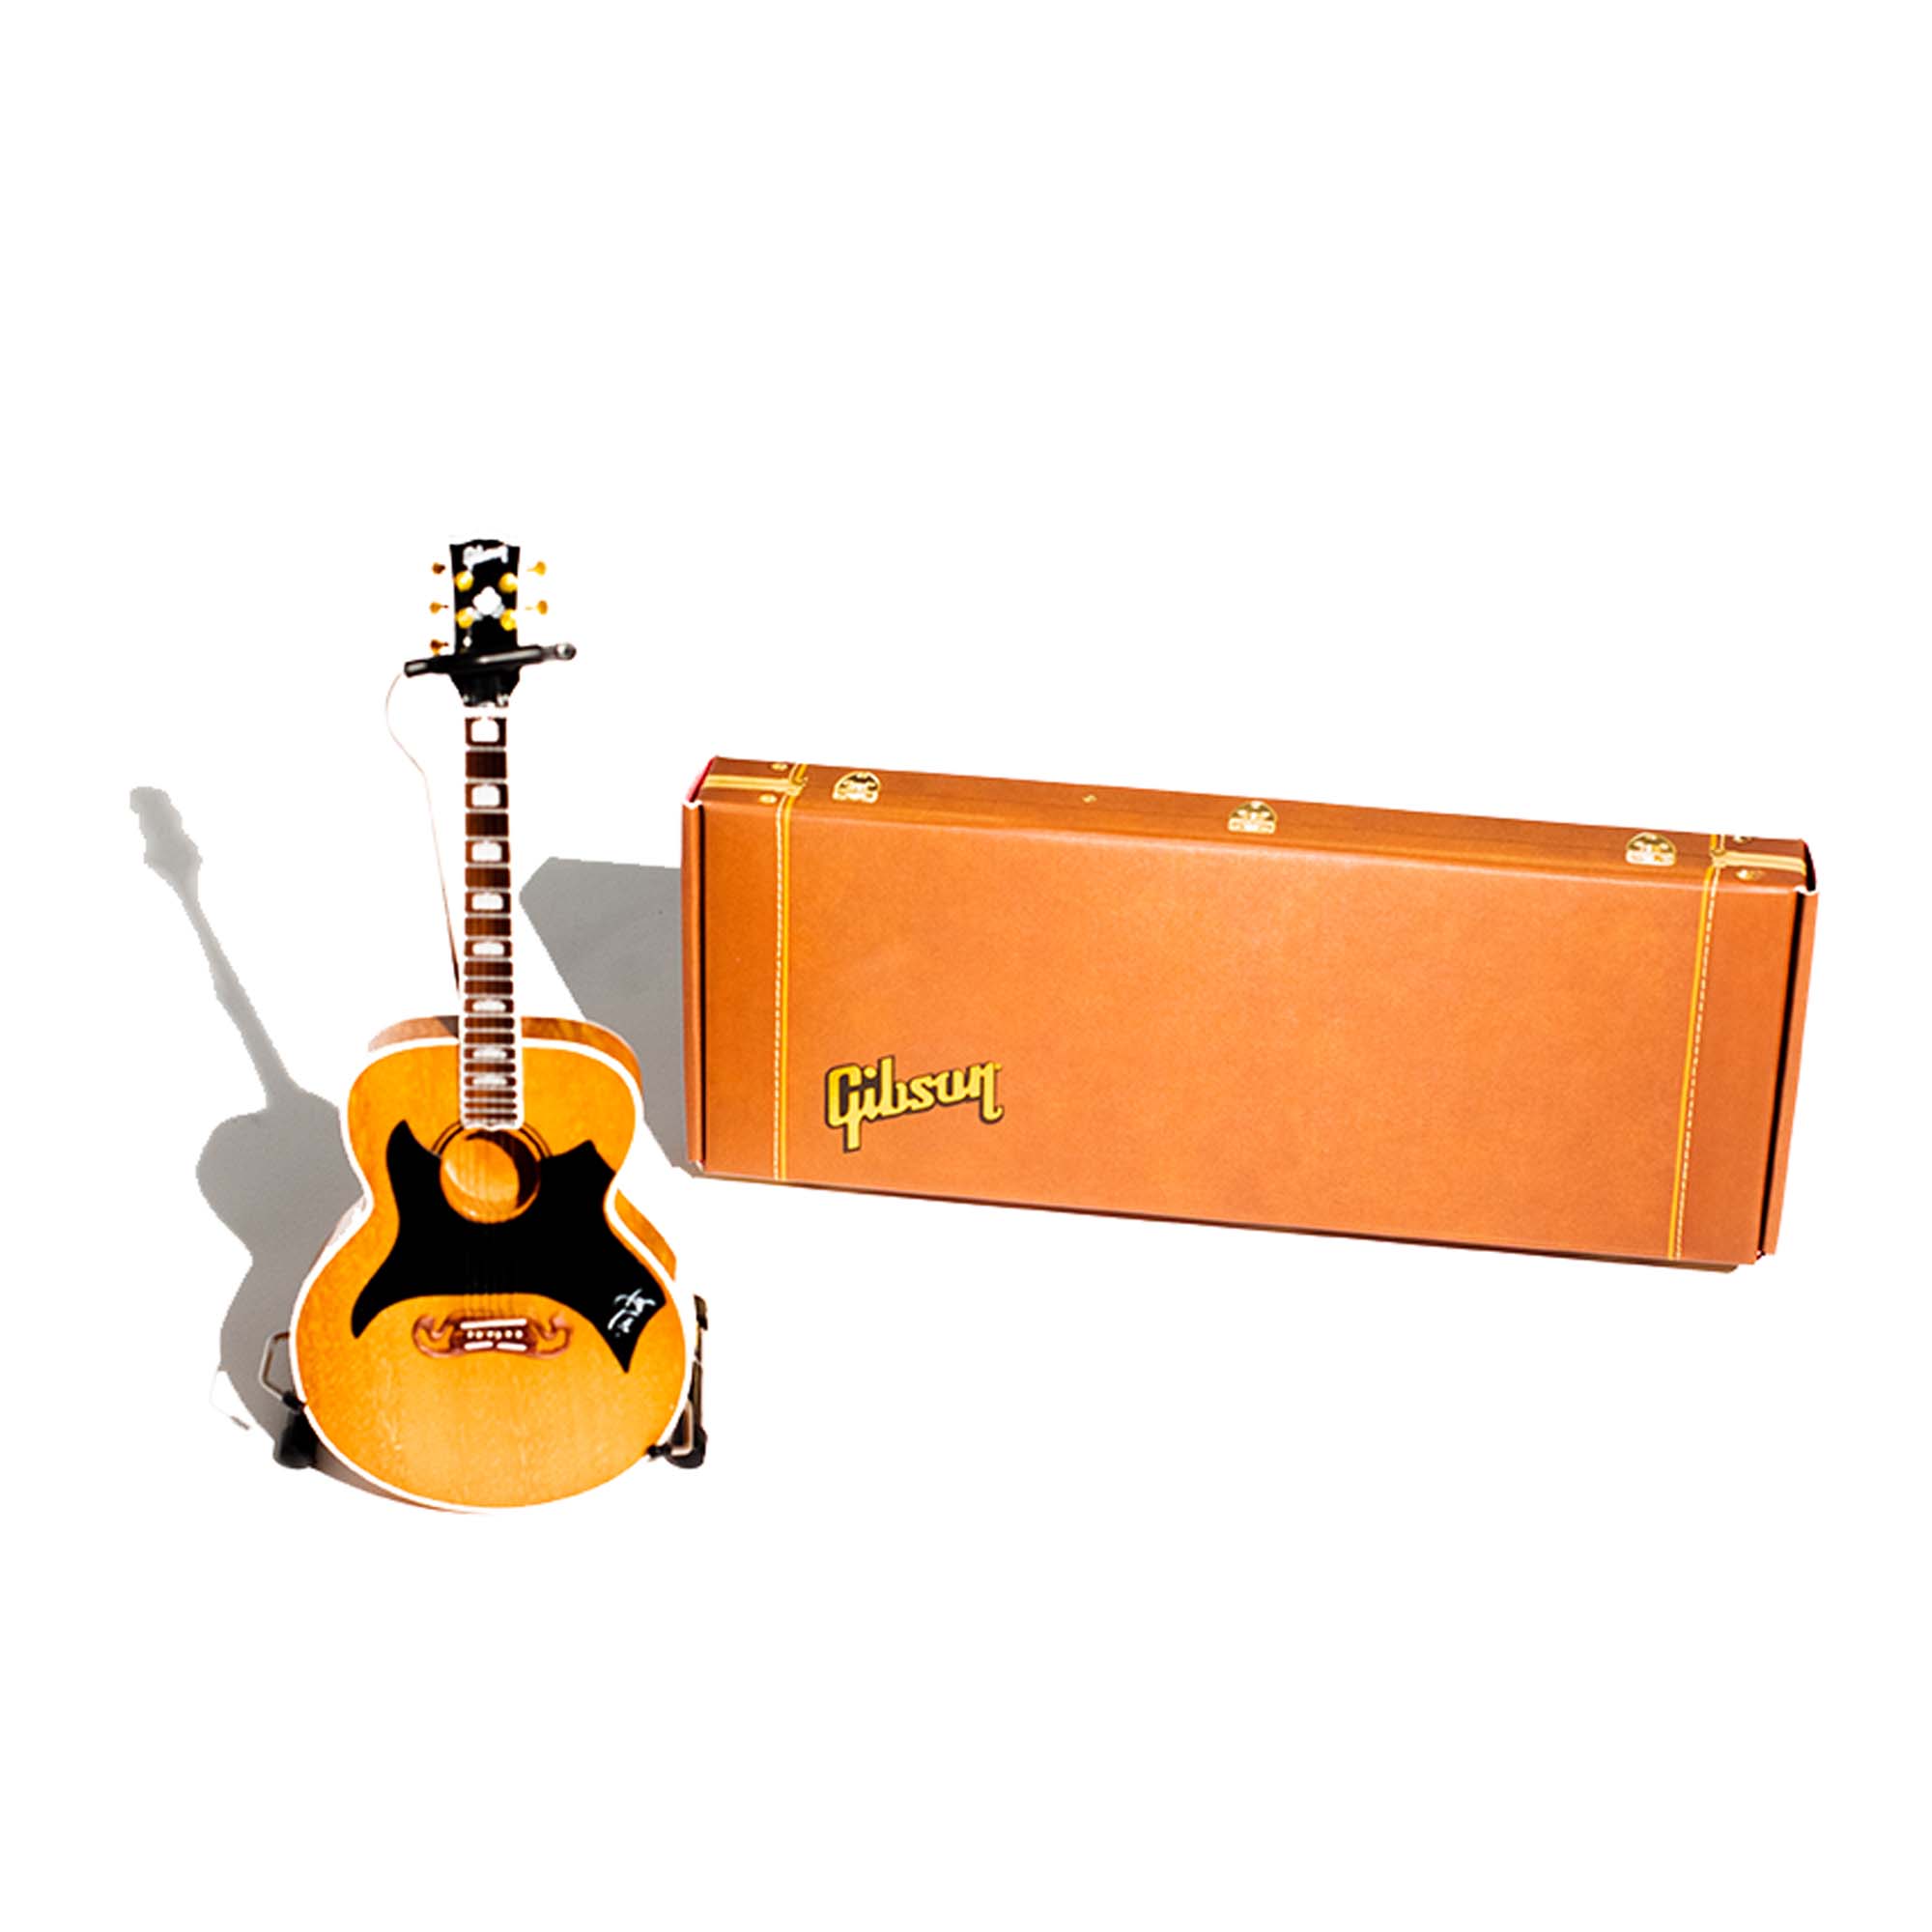 Gibson x Tom Petty SJ-200 Wildflower Miniature Guitar